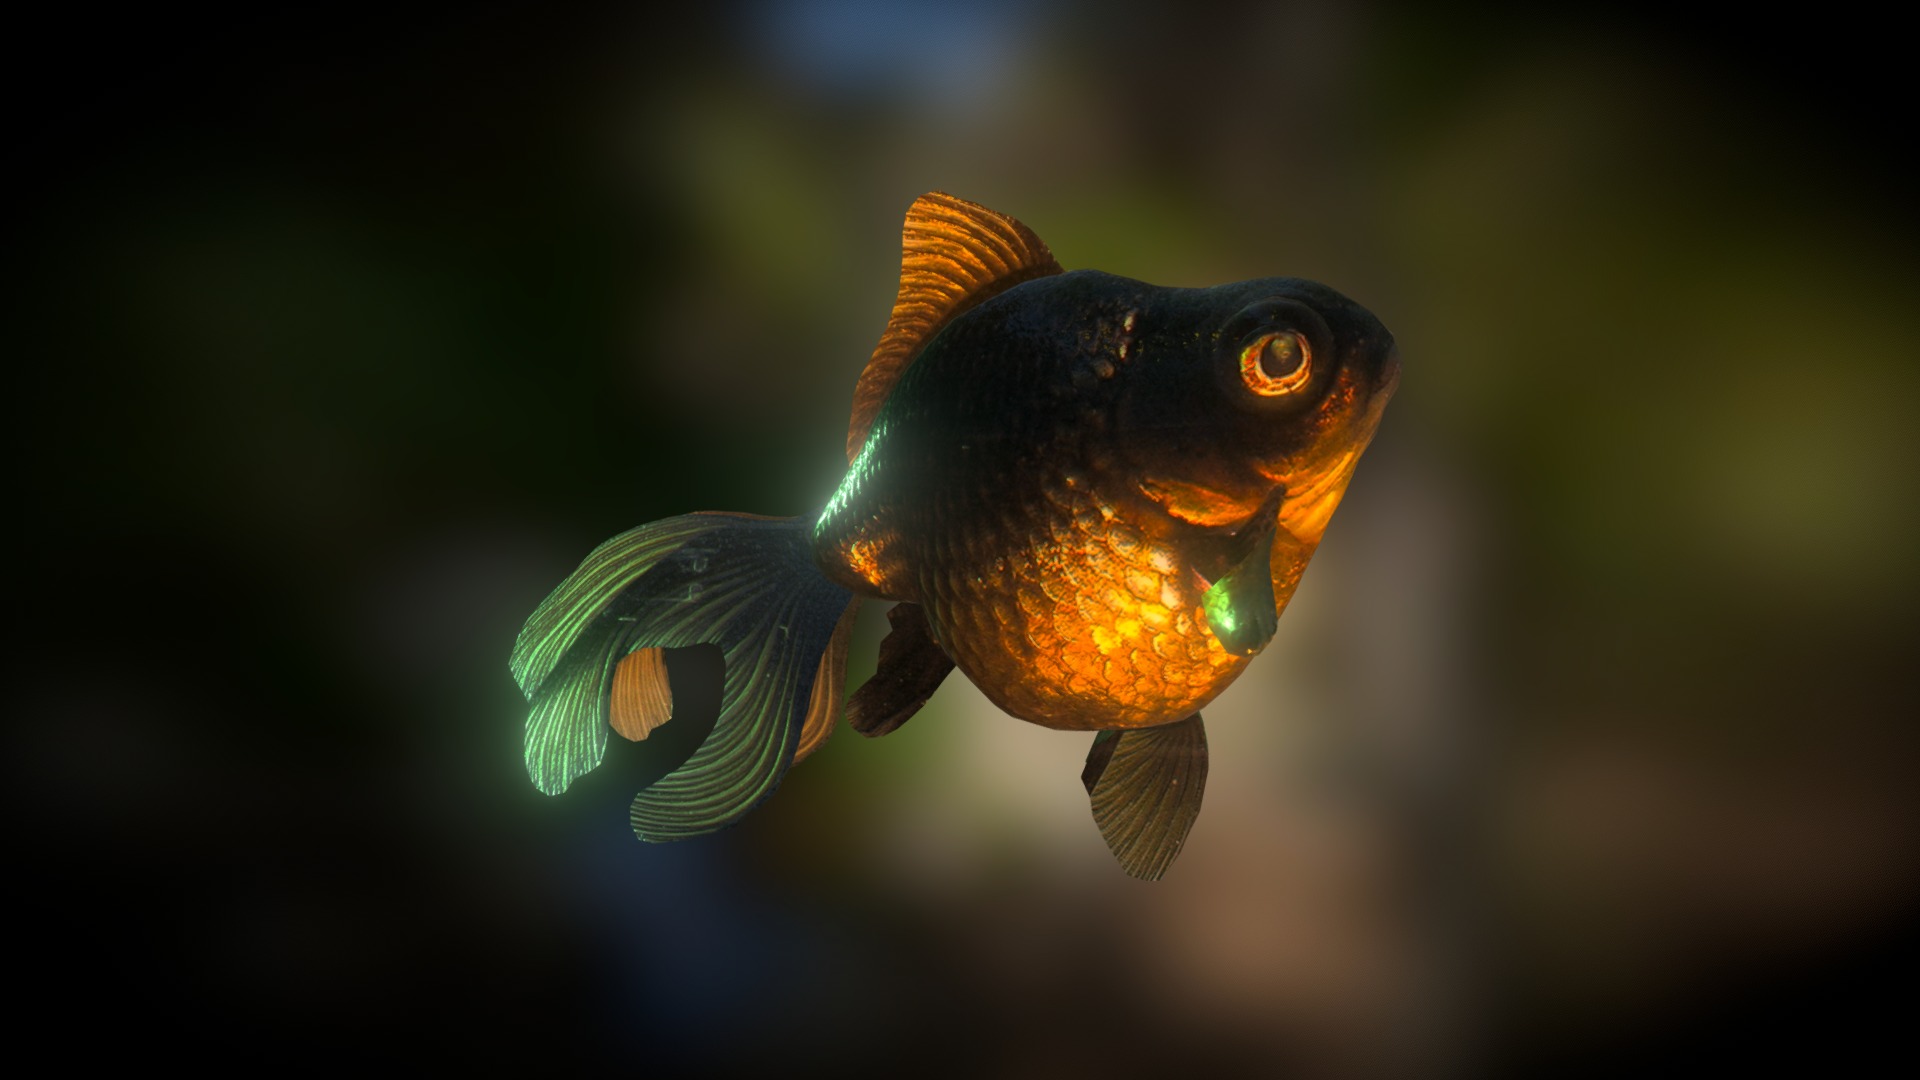 3D model Black Moor Goldfish (Smoothie-3D upload) - This is a 3D model of the Black Moor Goldfish (Smoothie-3D upload). The 3D model is about a fish swimming in water.